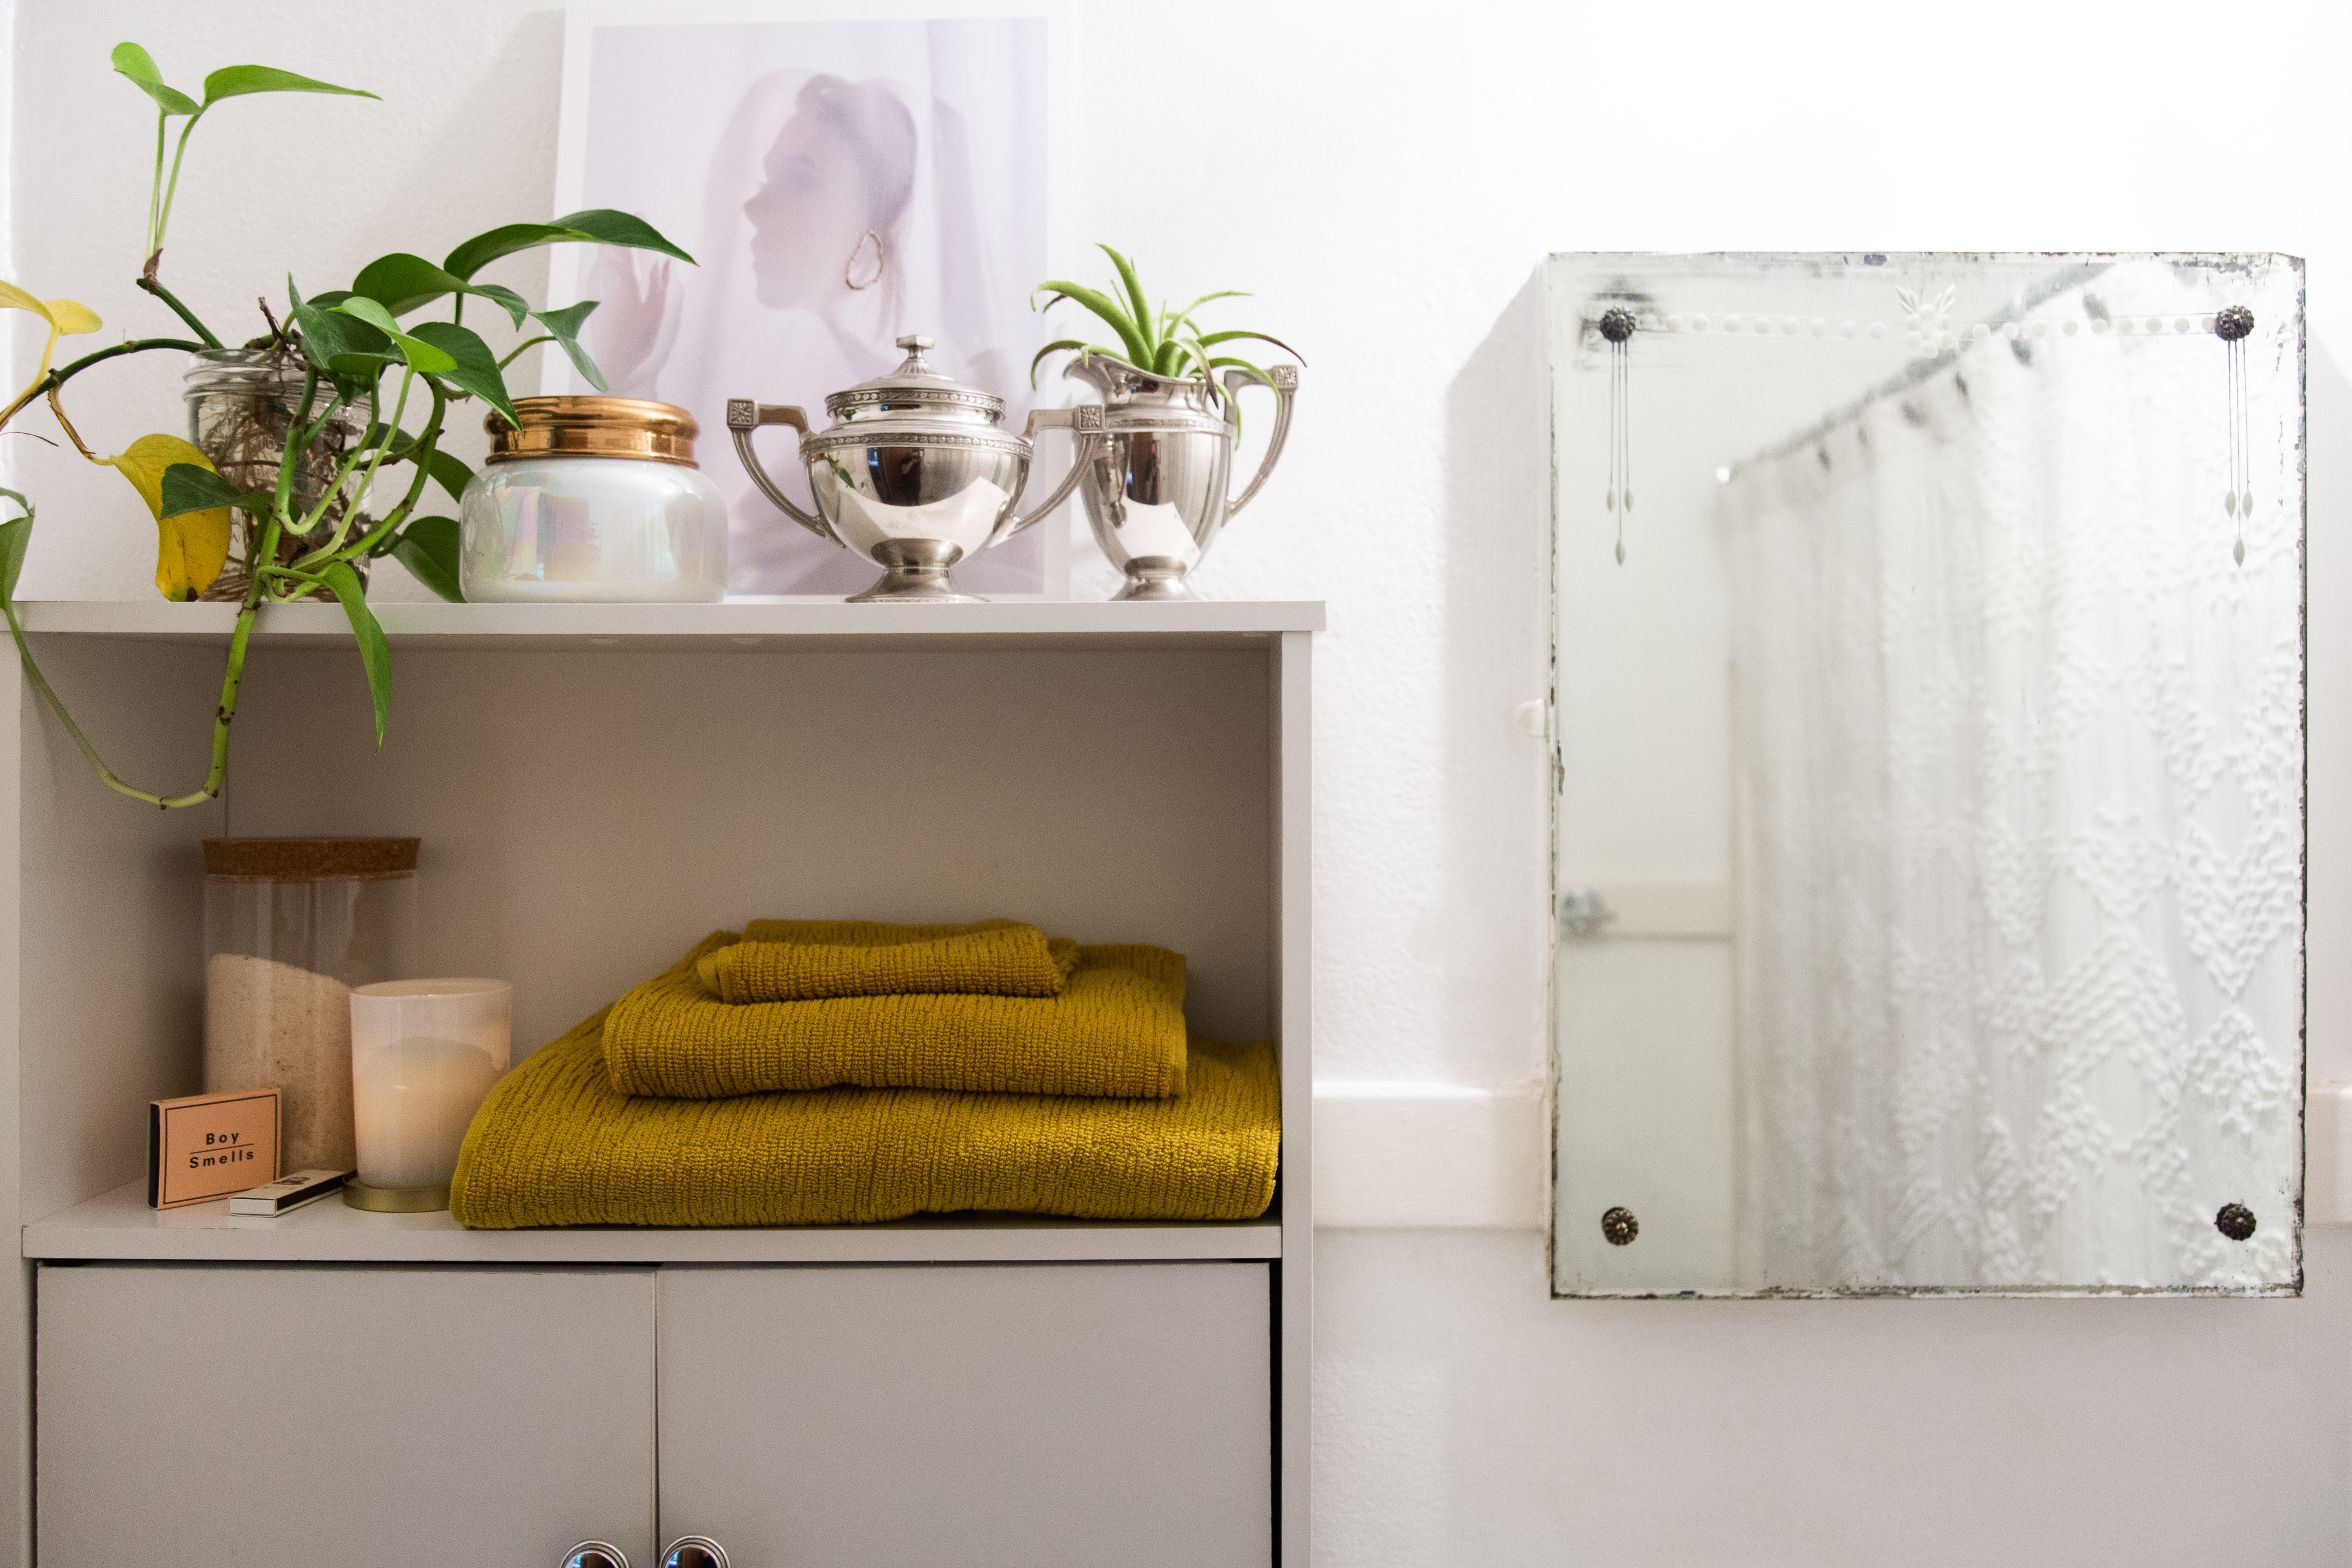 55 Best bathroom towel storage ideas